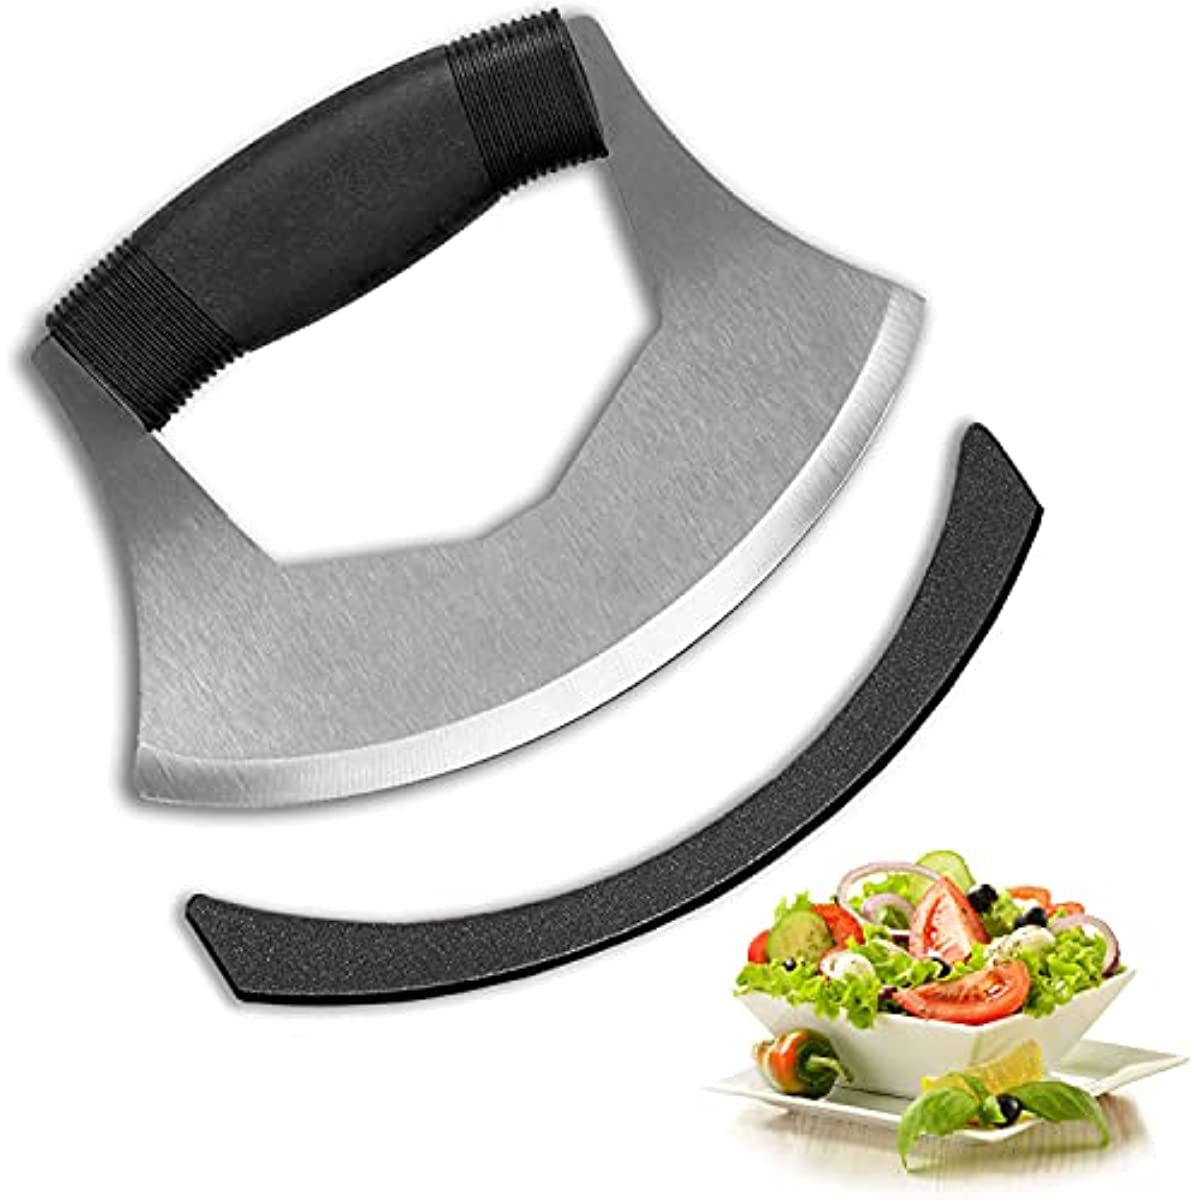 Double Blade Salad Cutter, Stainless Steel Mezzaluna Chopper